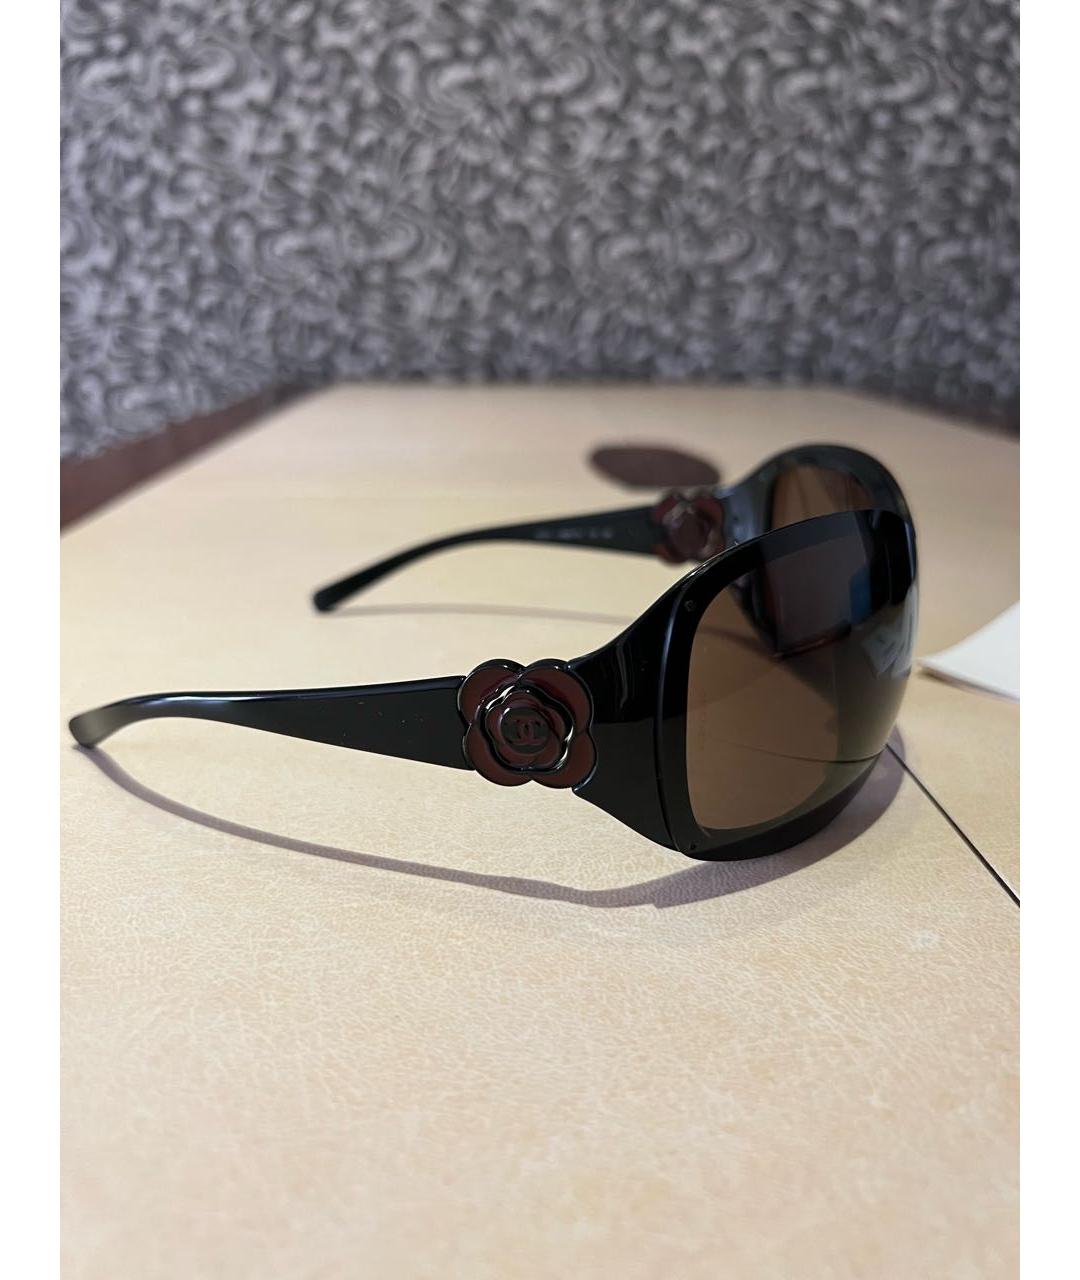 CHANEL PRE-OWNED Коричневые пластиковые солнцезащитные очки, фото 2